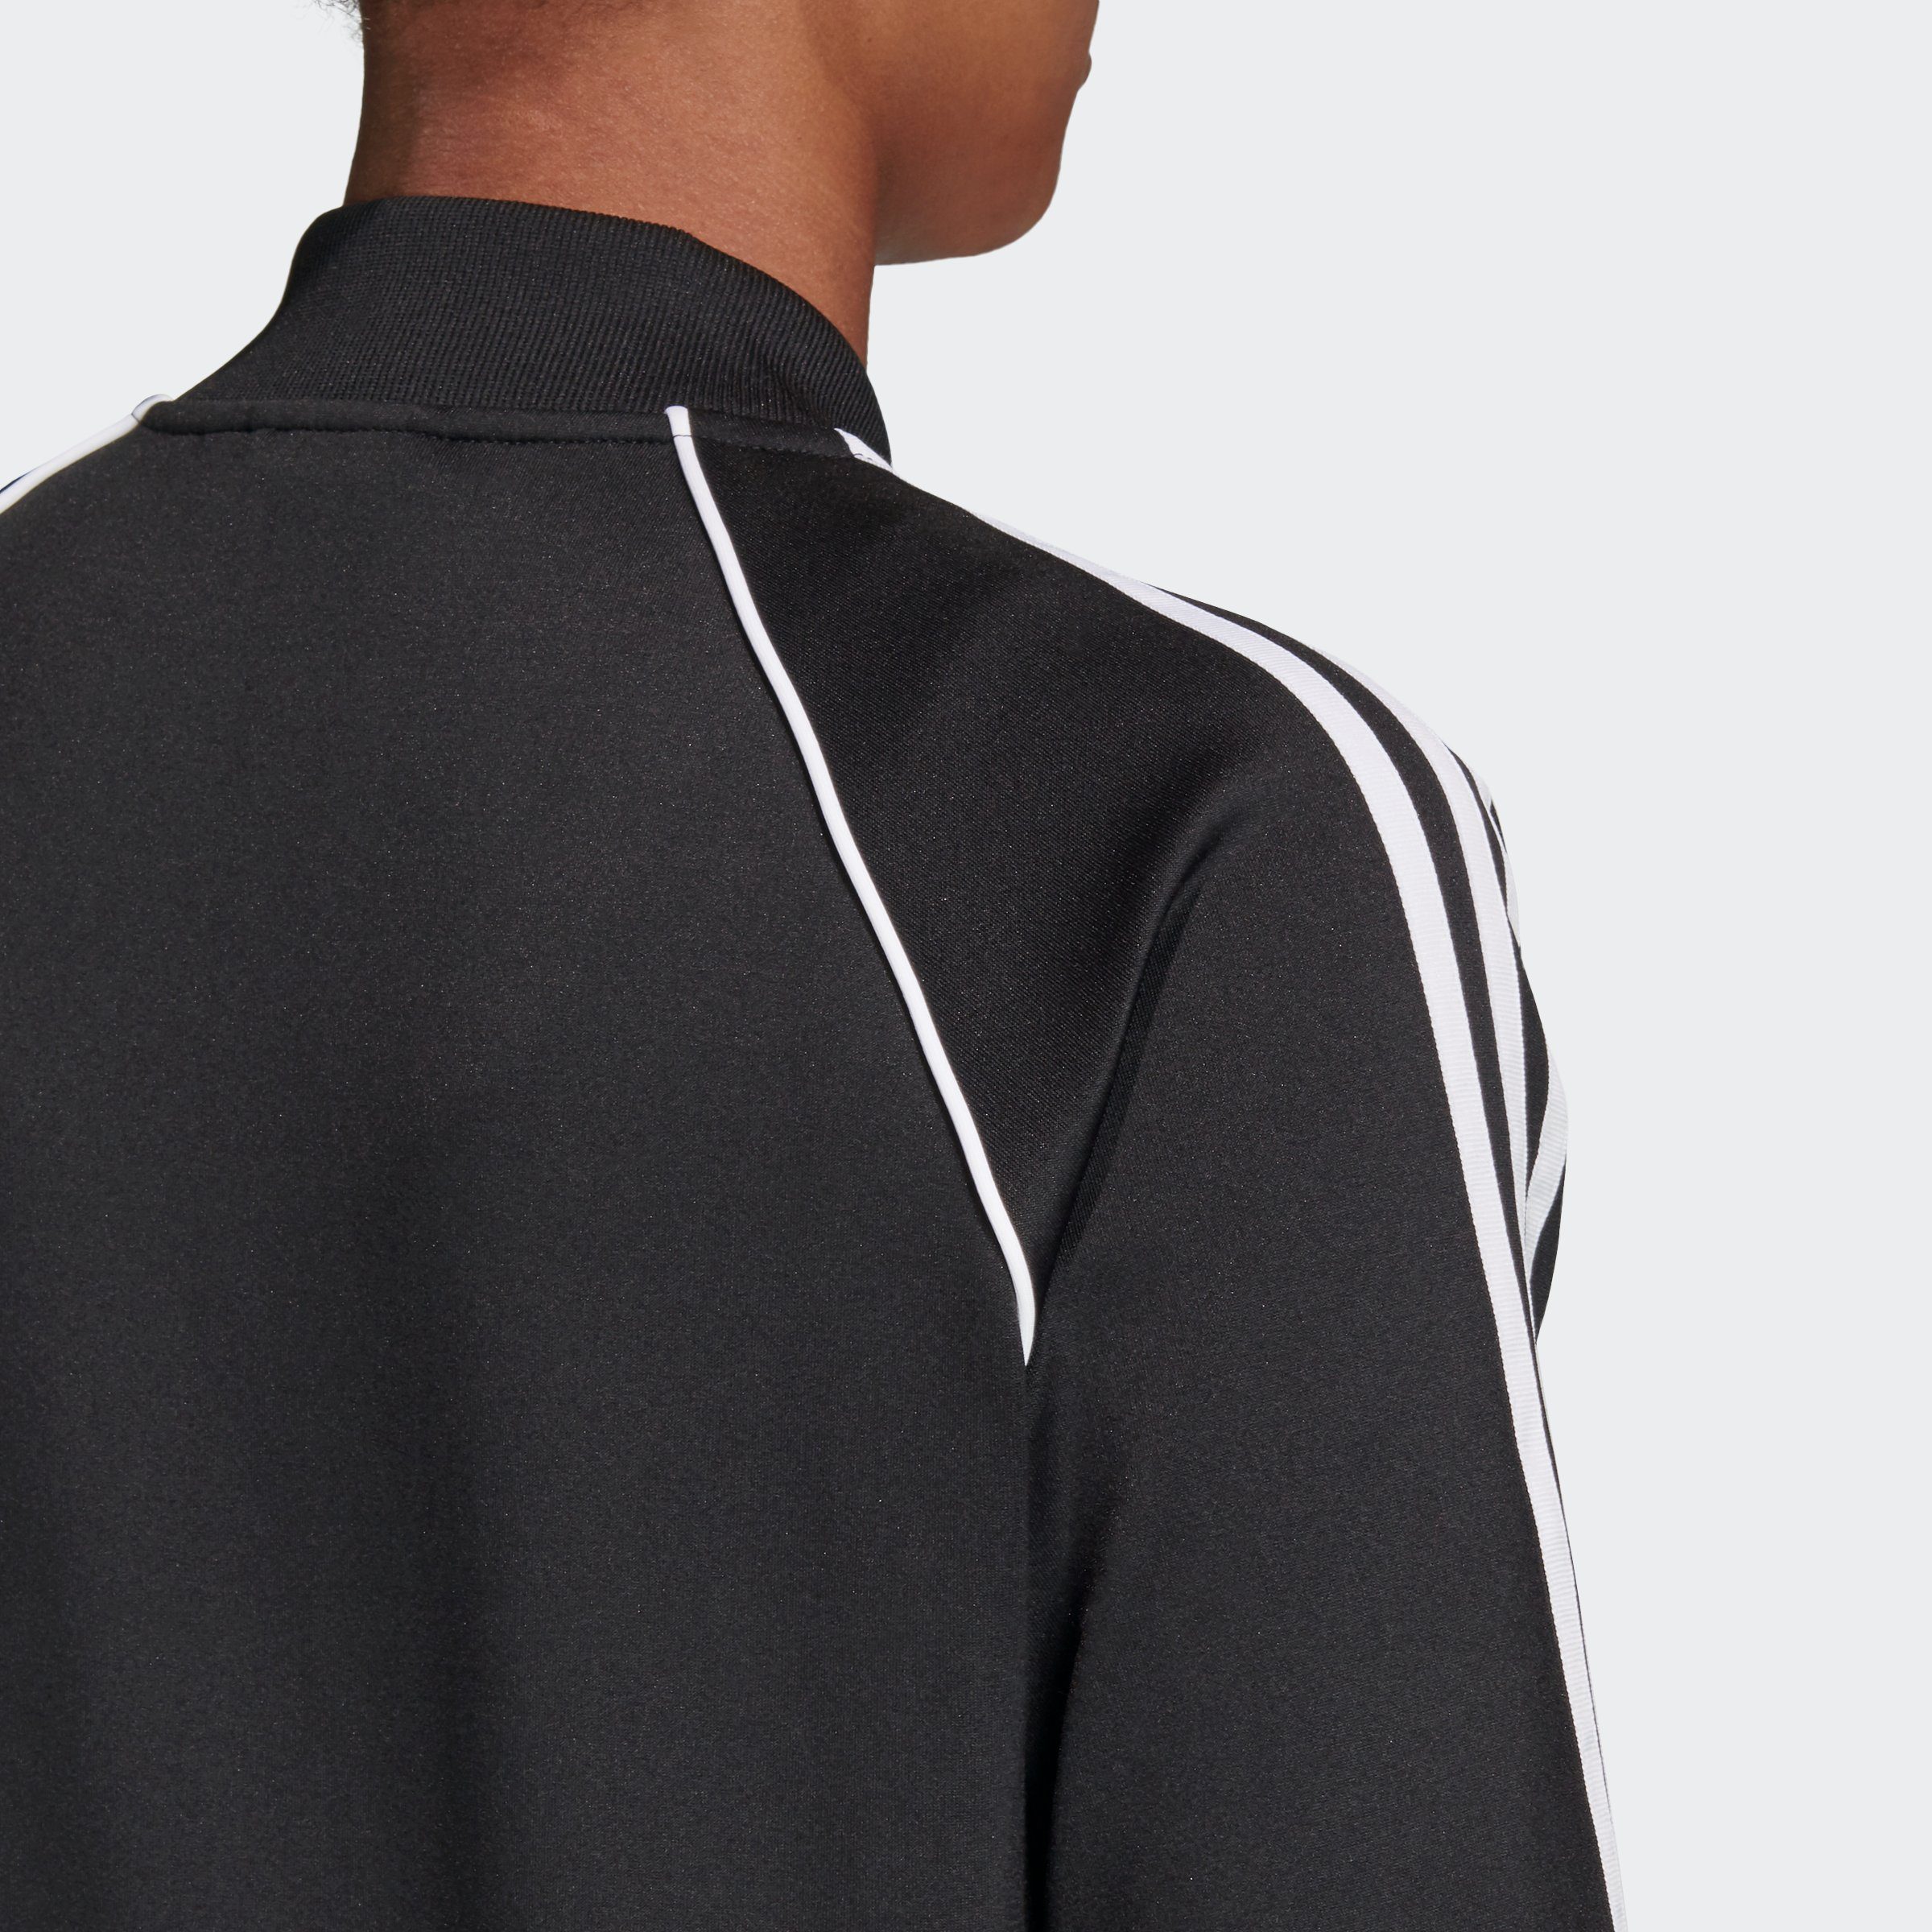 BLACK/WHITE ORIGINALS Trainingsjacke adidas Originals SST